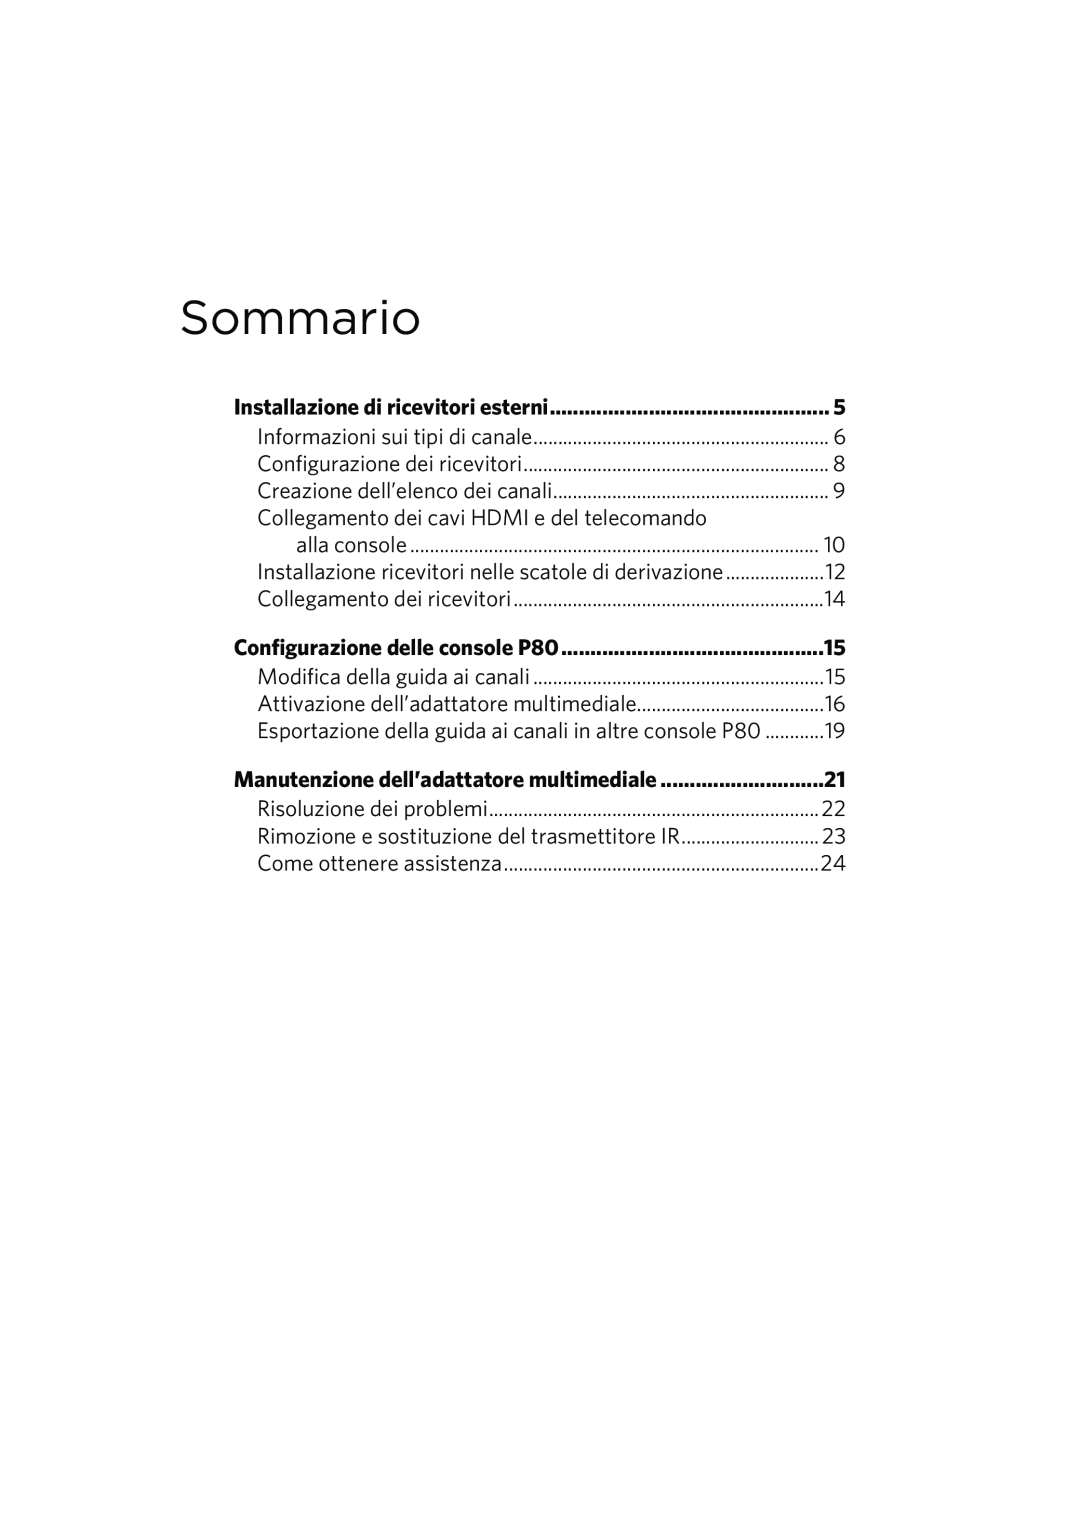 Precor P80 manual Sommario 